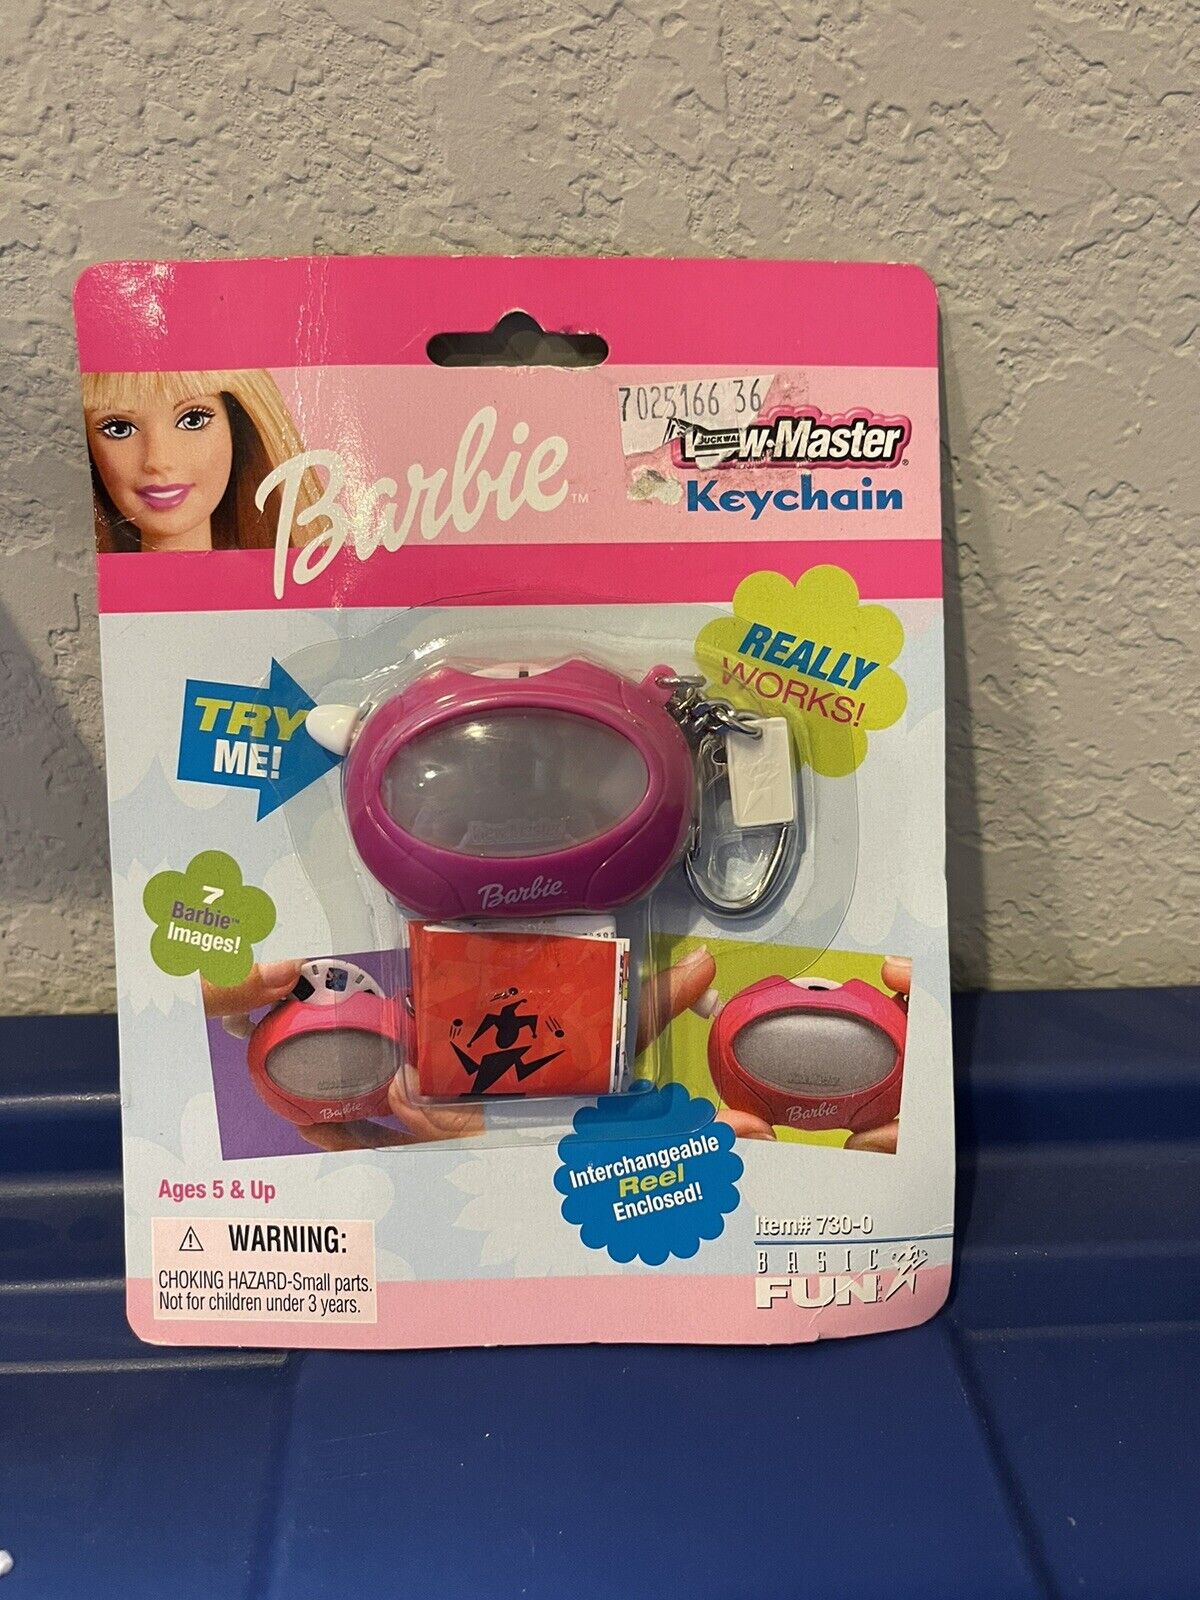 NIP Tiny view-master Barbie Keychain gaf view-master Reel Viewer View Finder